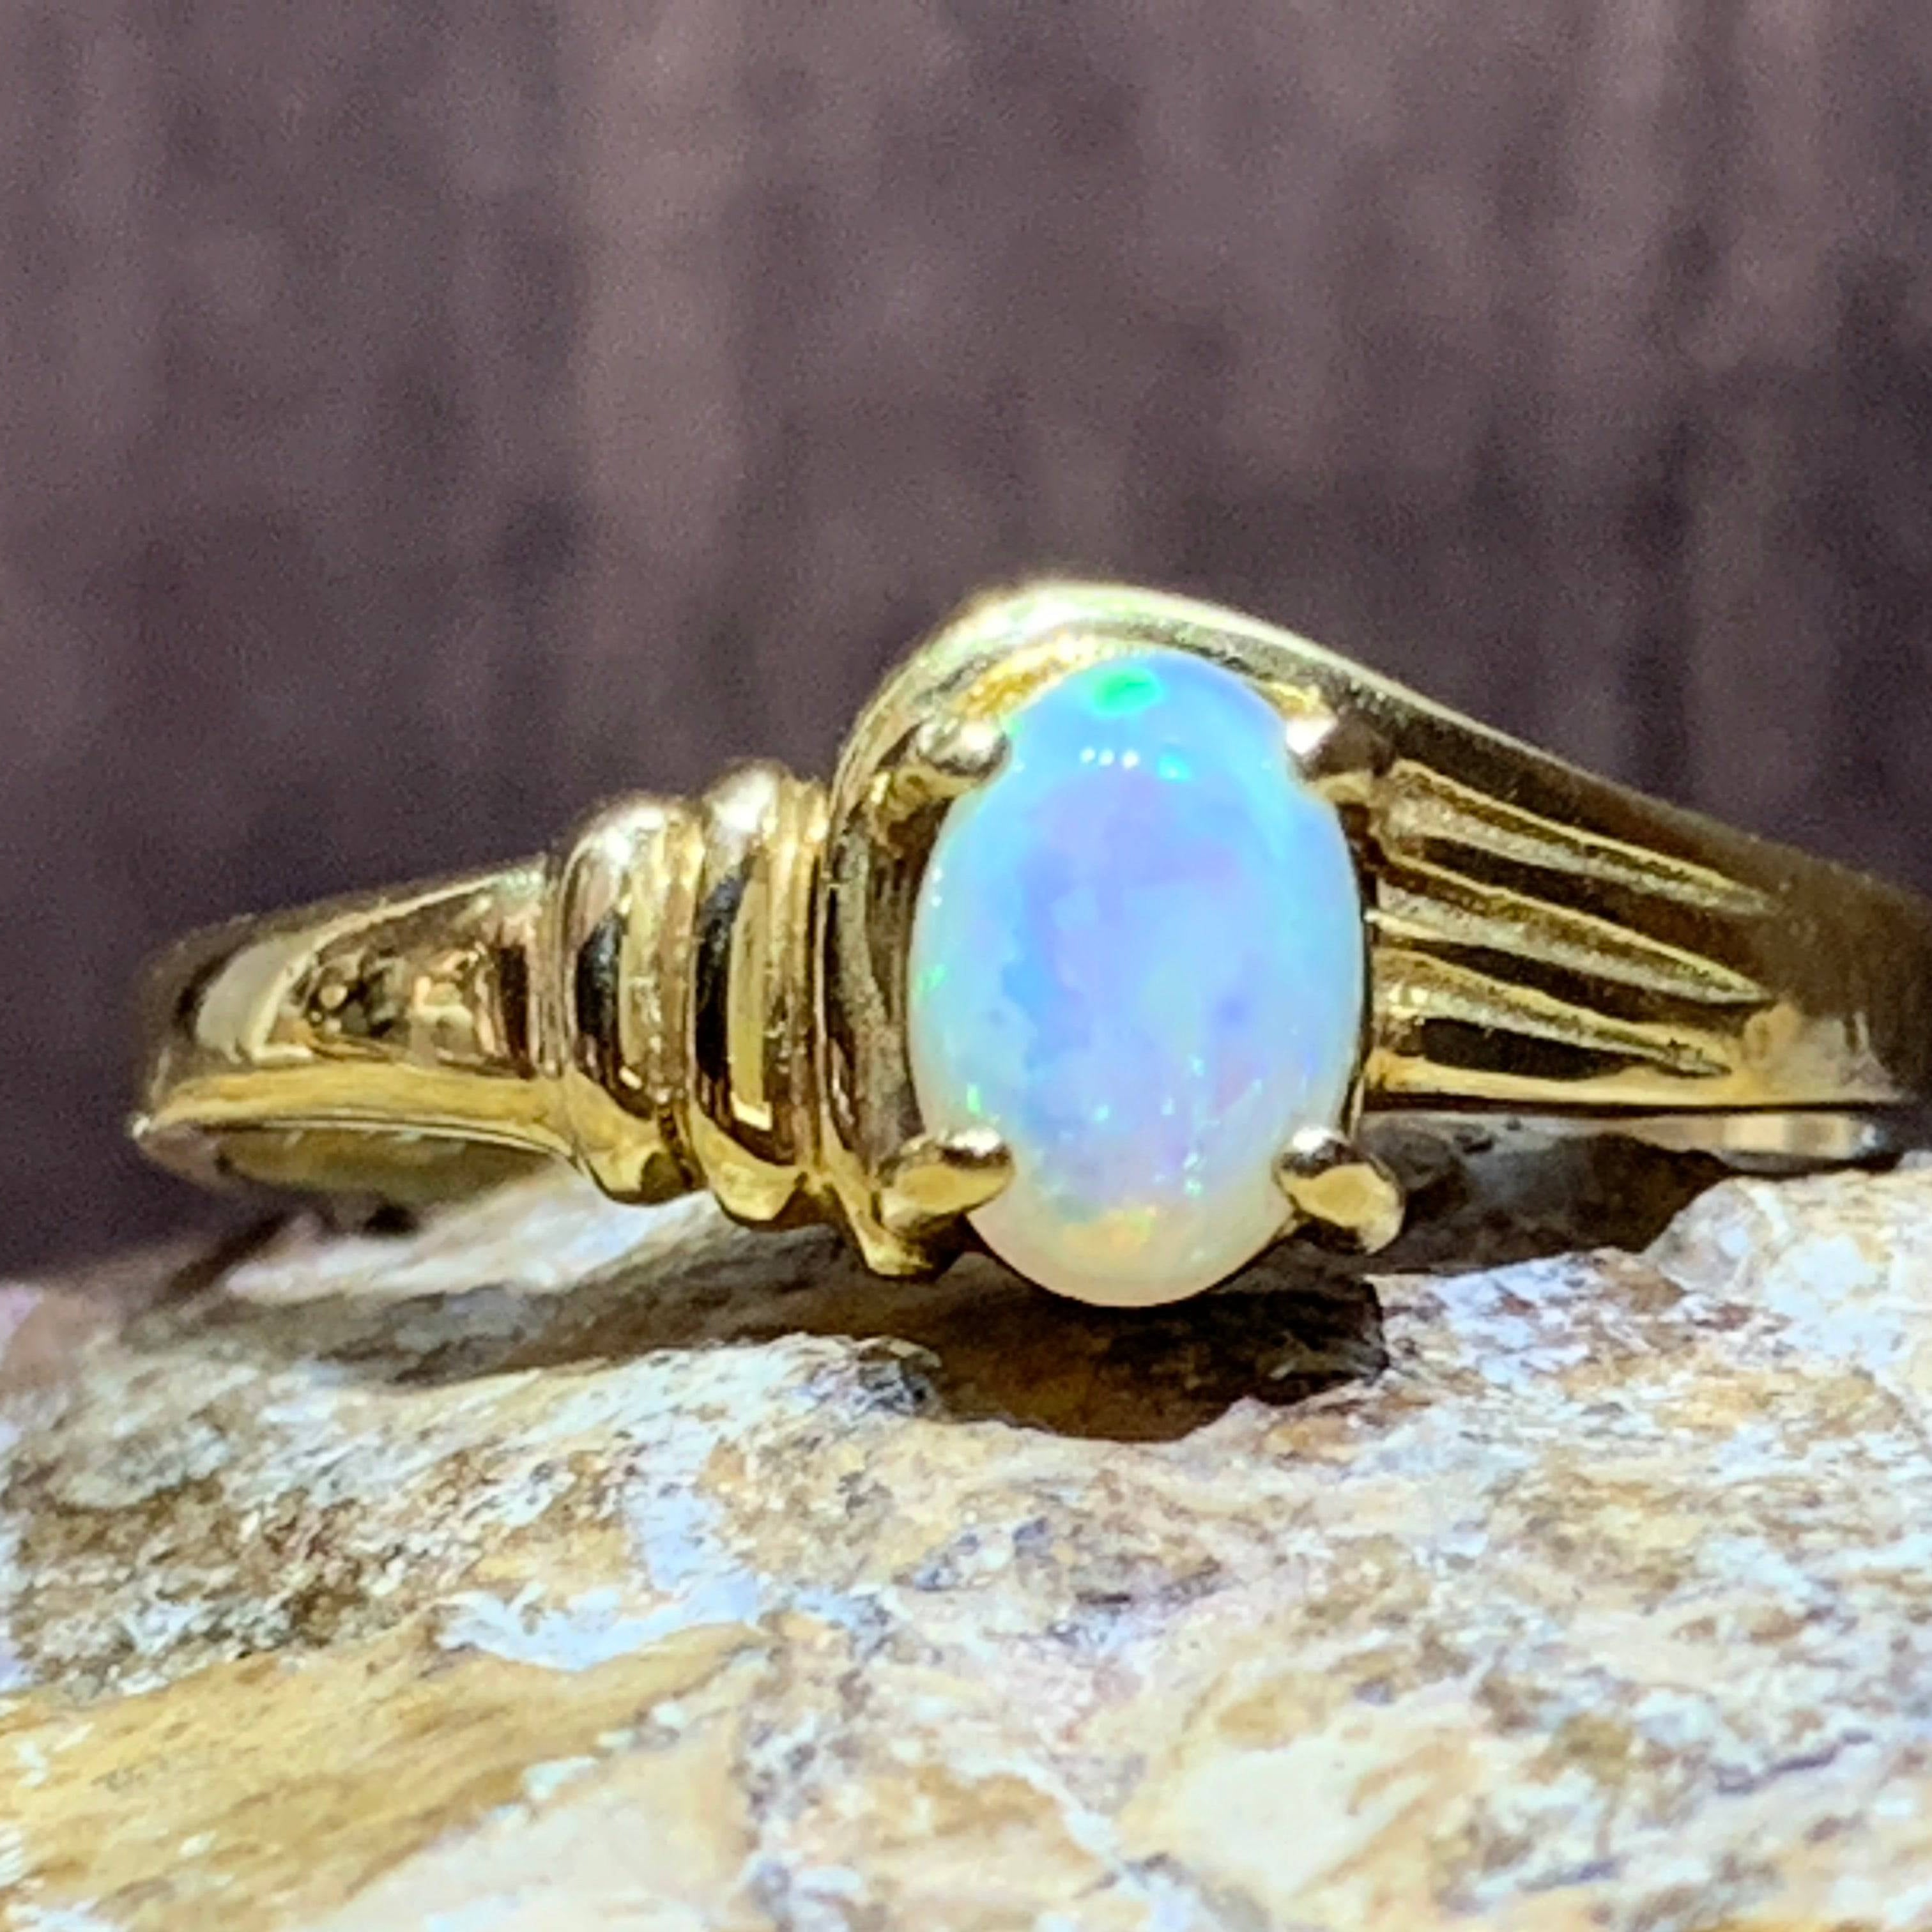 18kt Yellow Gold fancy solitaire ring - Masterpiece Jewellery Opal & Gems Sydney Australia | Online Shop